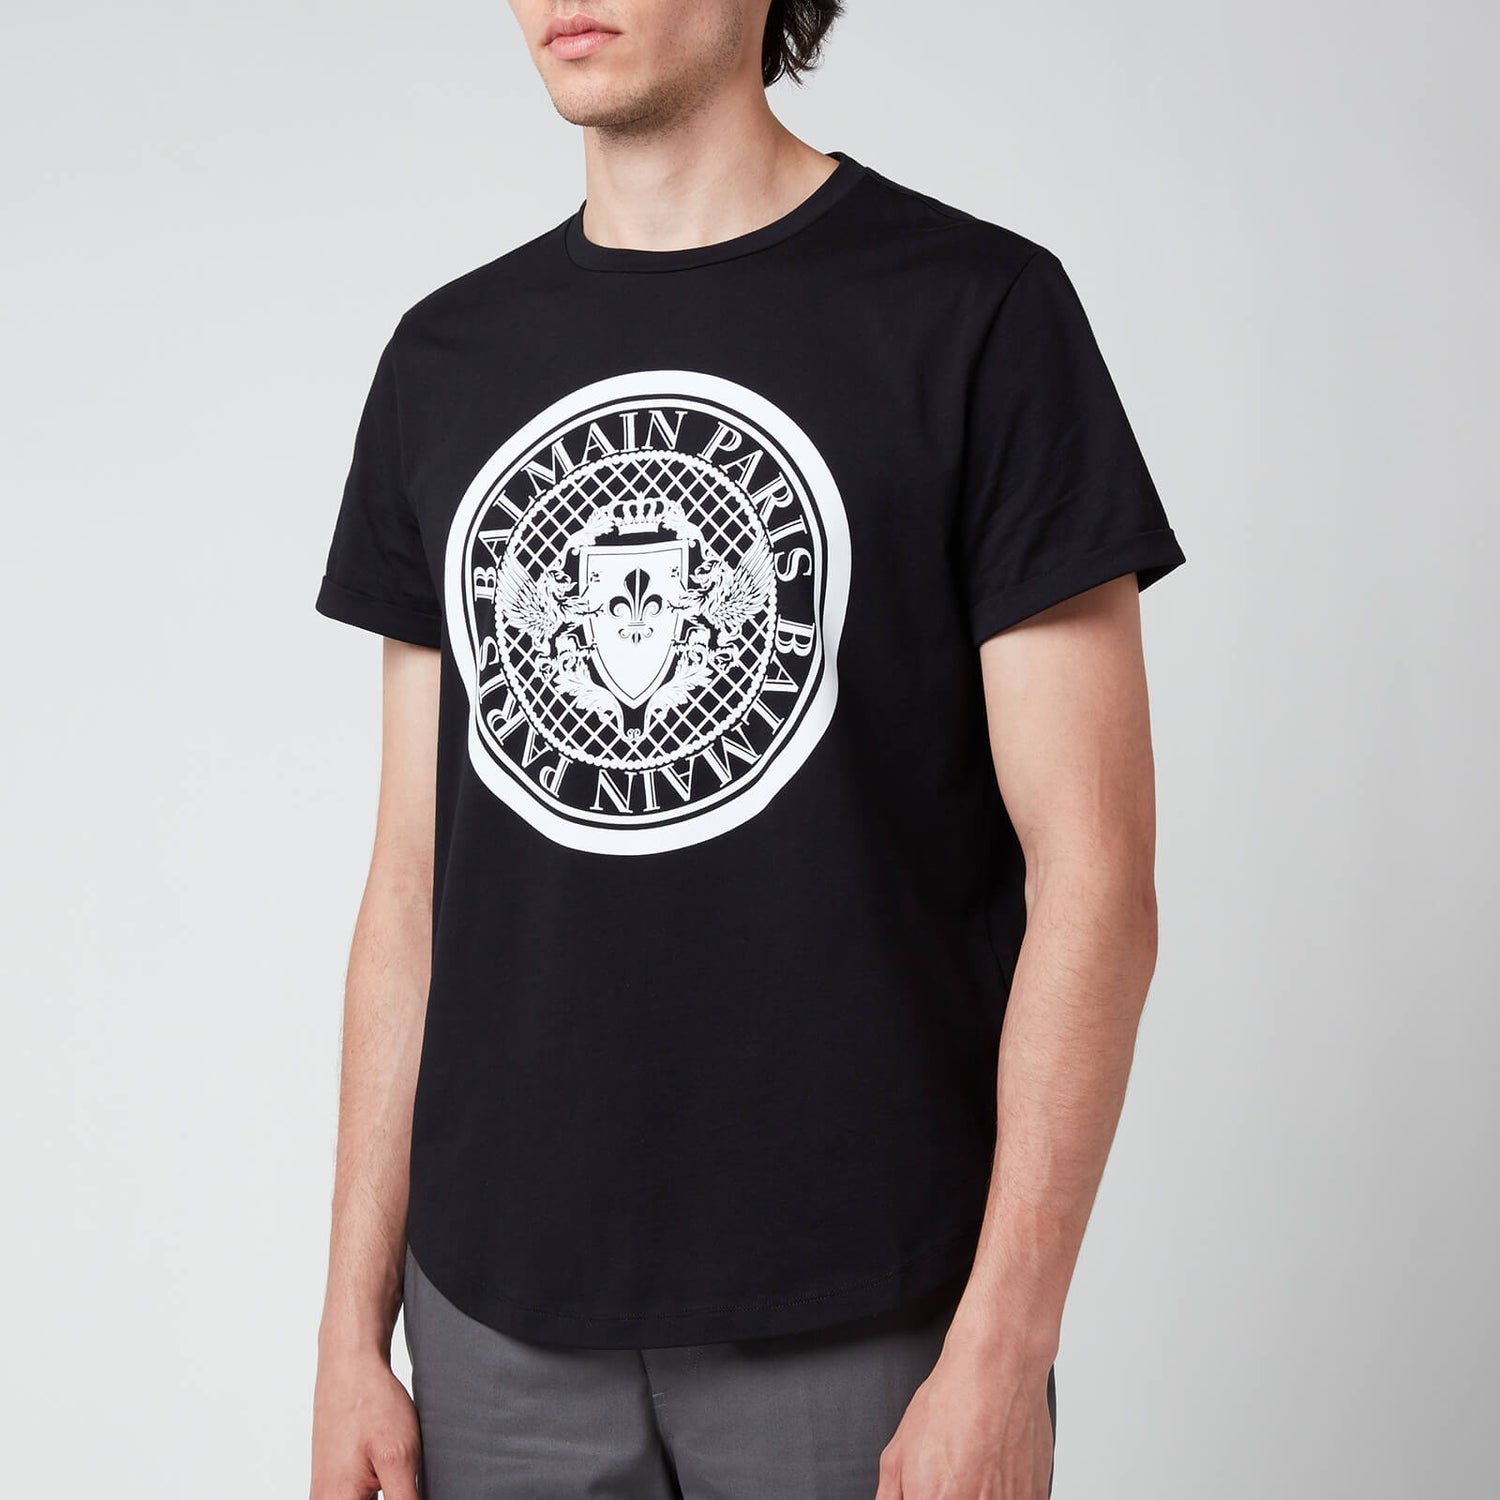 Balmain Men's Coin Flock T-Shirt - Black/White